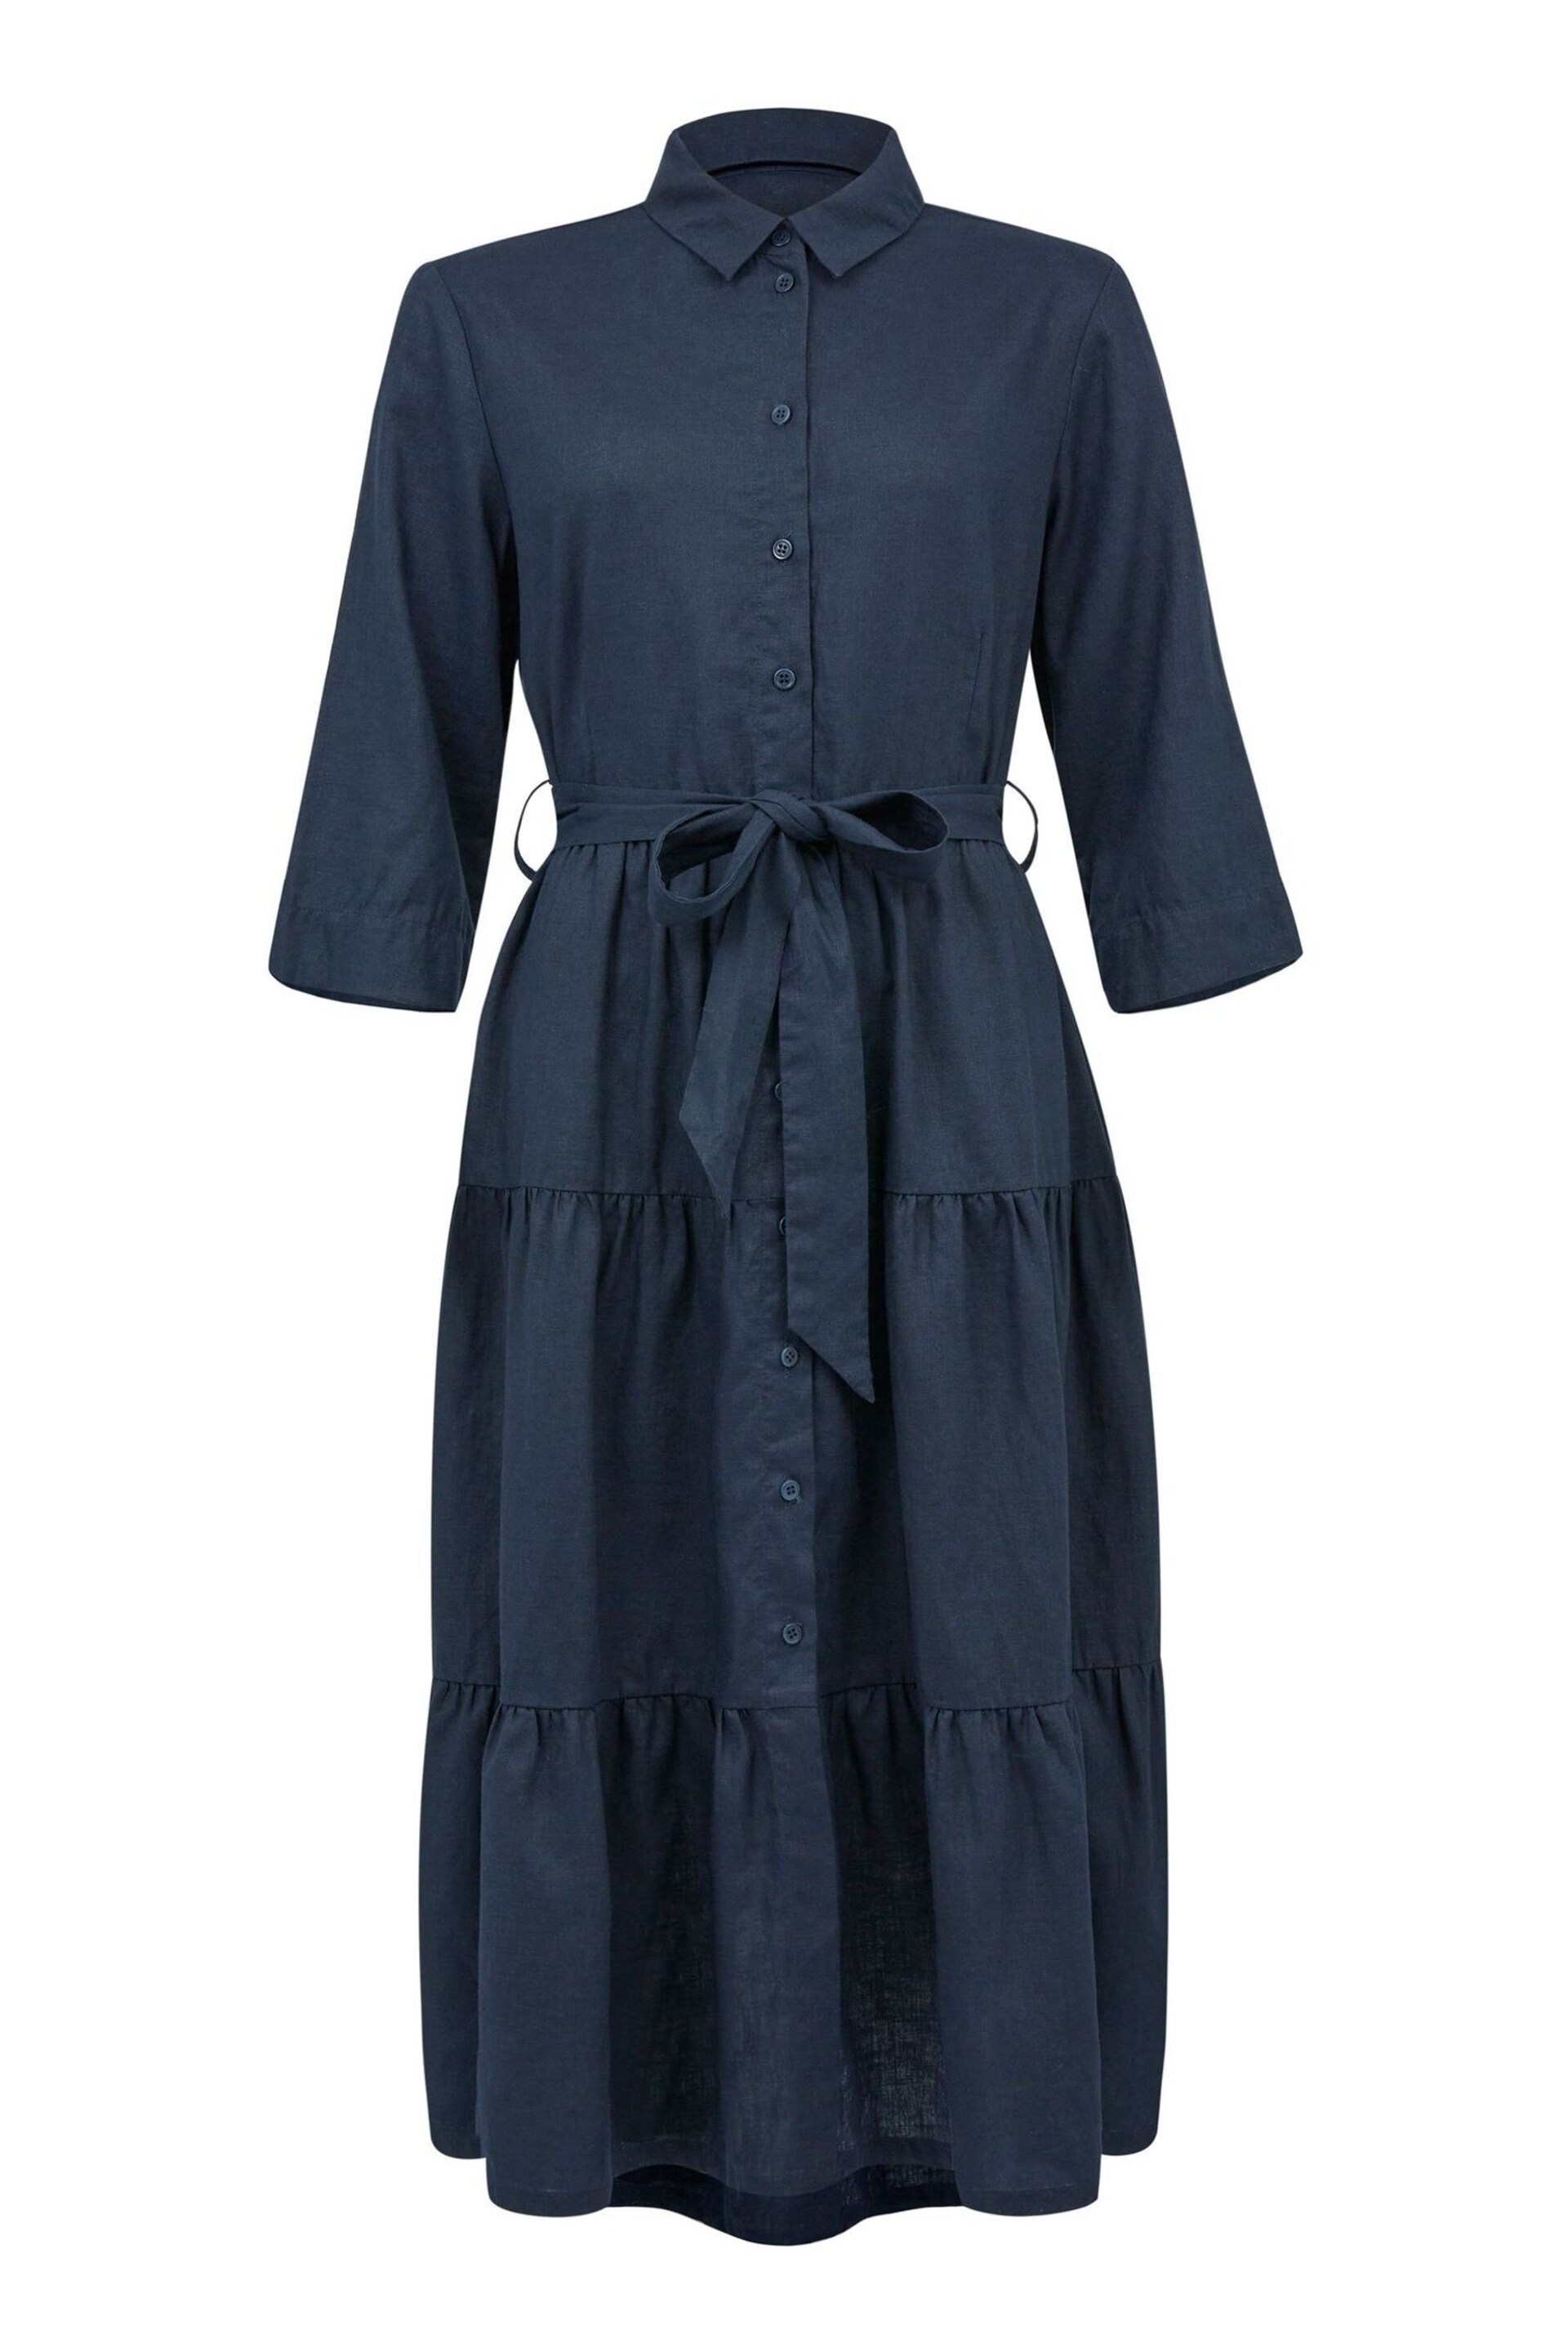 Celtic & Co. Blue Linen Tiered Midi Dresses - Image 2 of 7